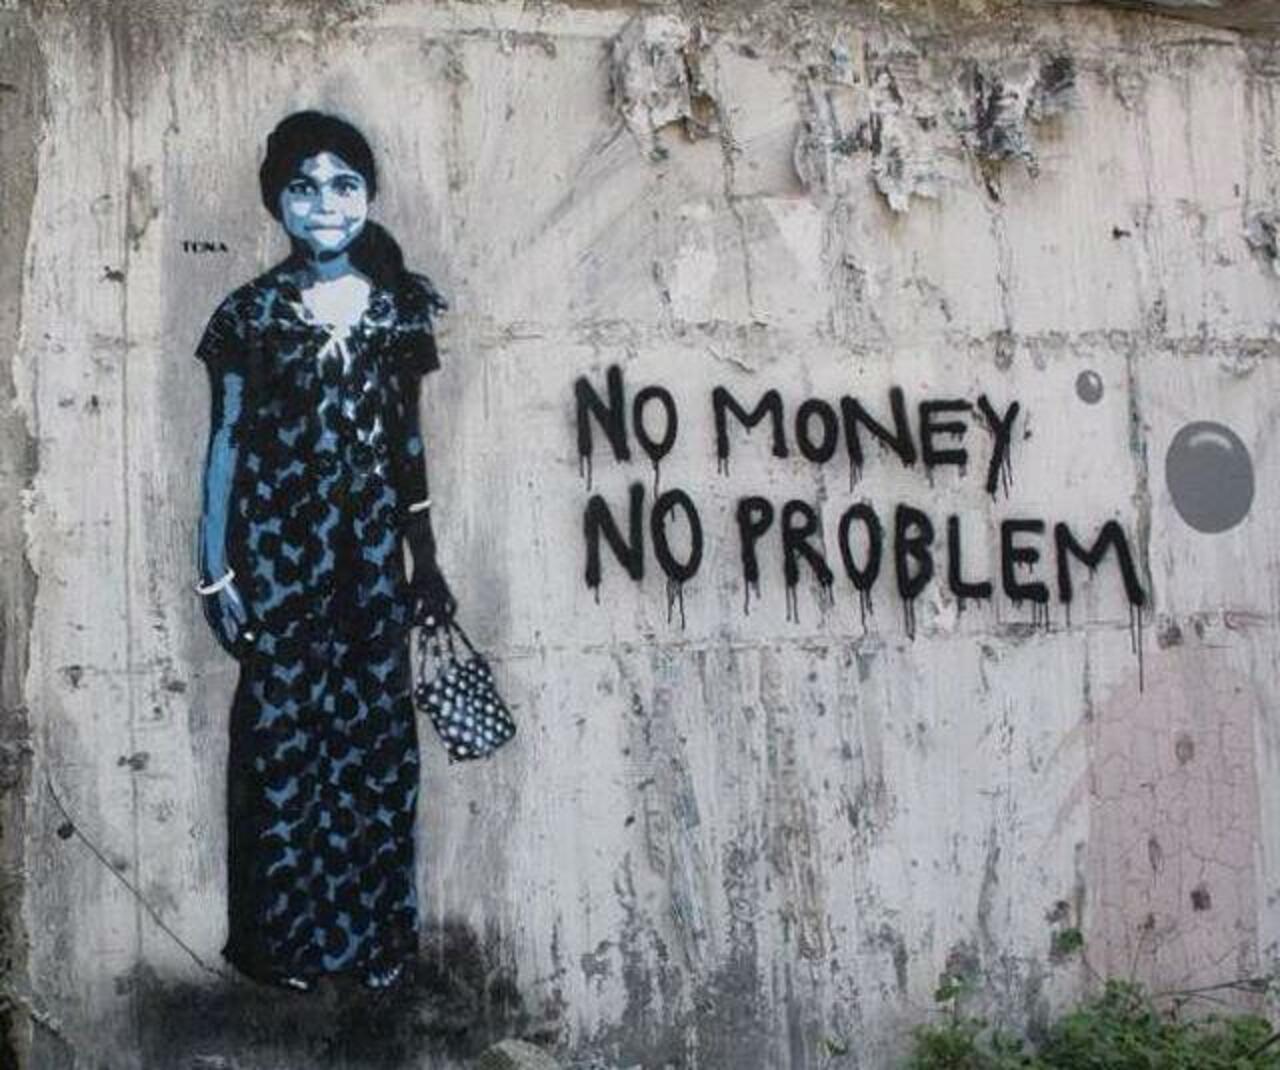 RT ArchaicManor "No Money No Problem
Street Art by TONA in Pokara, Nepal 

#art #arte #graffiti #streetart http://t.co/nBWtLsv9A3 yo"